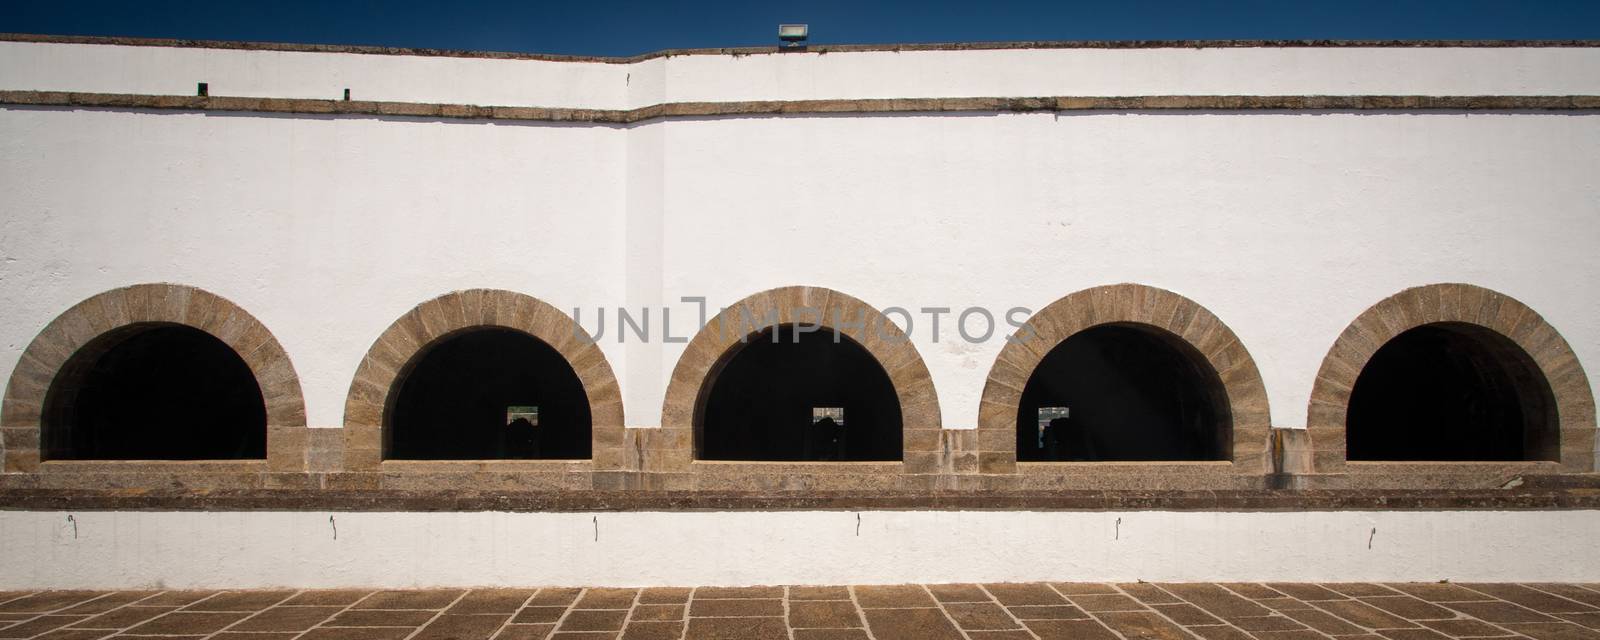 The Fortress of Santa Cruz by CelsoDiniz